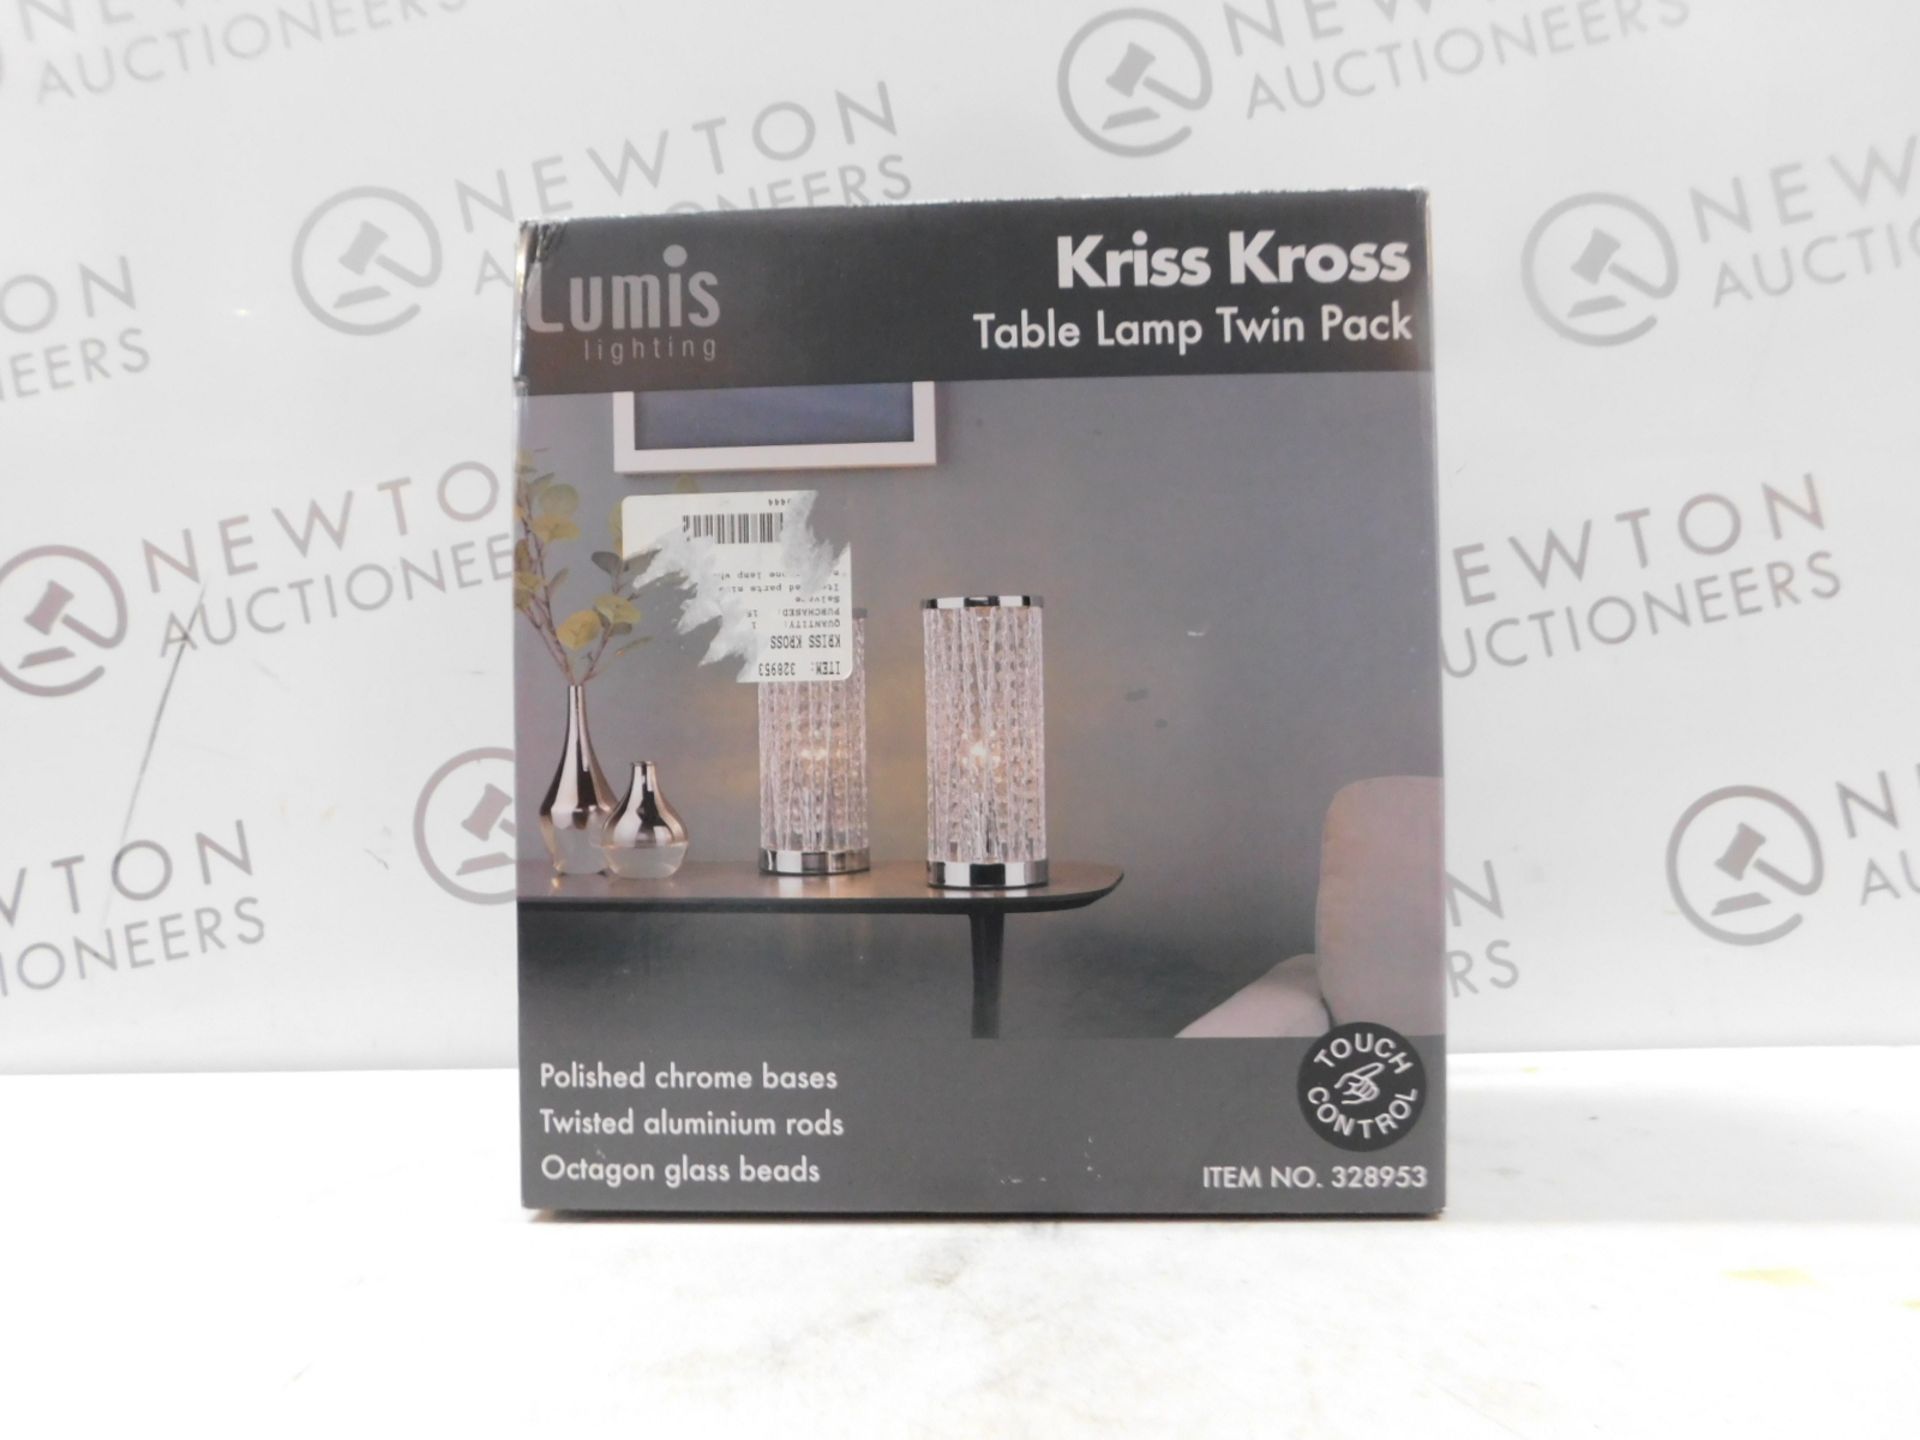 1 BOXED LUMIS LIGHTING KRISS KROSS TABLE LAMP RRP Â£19 (1 IN BOX)